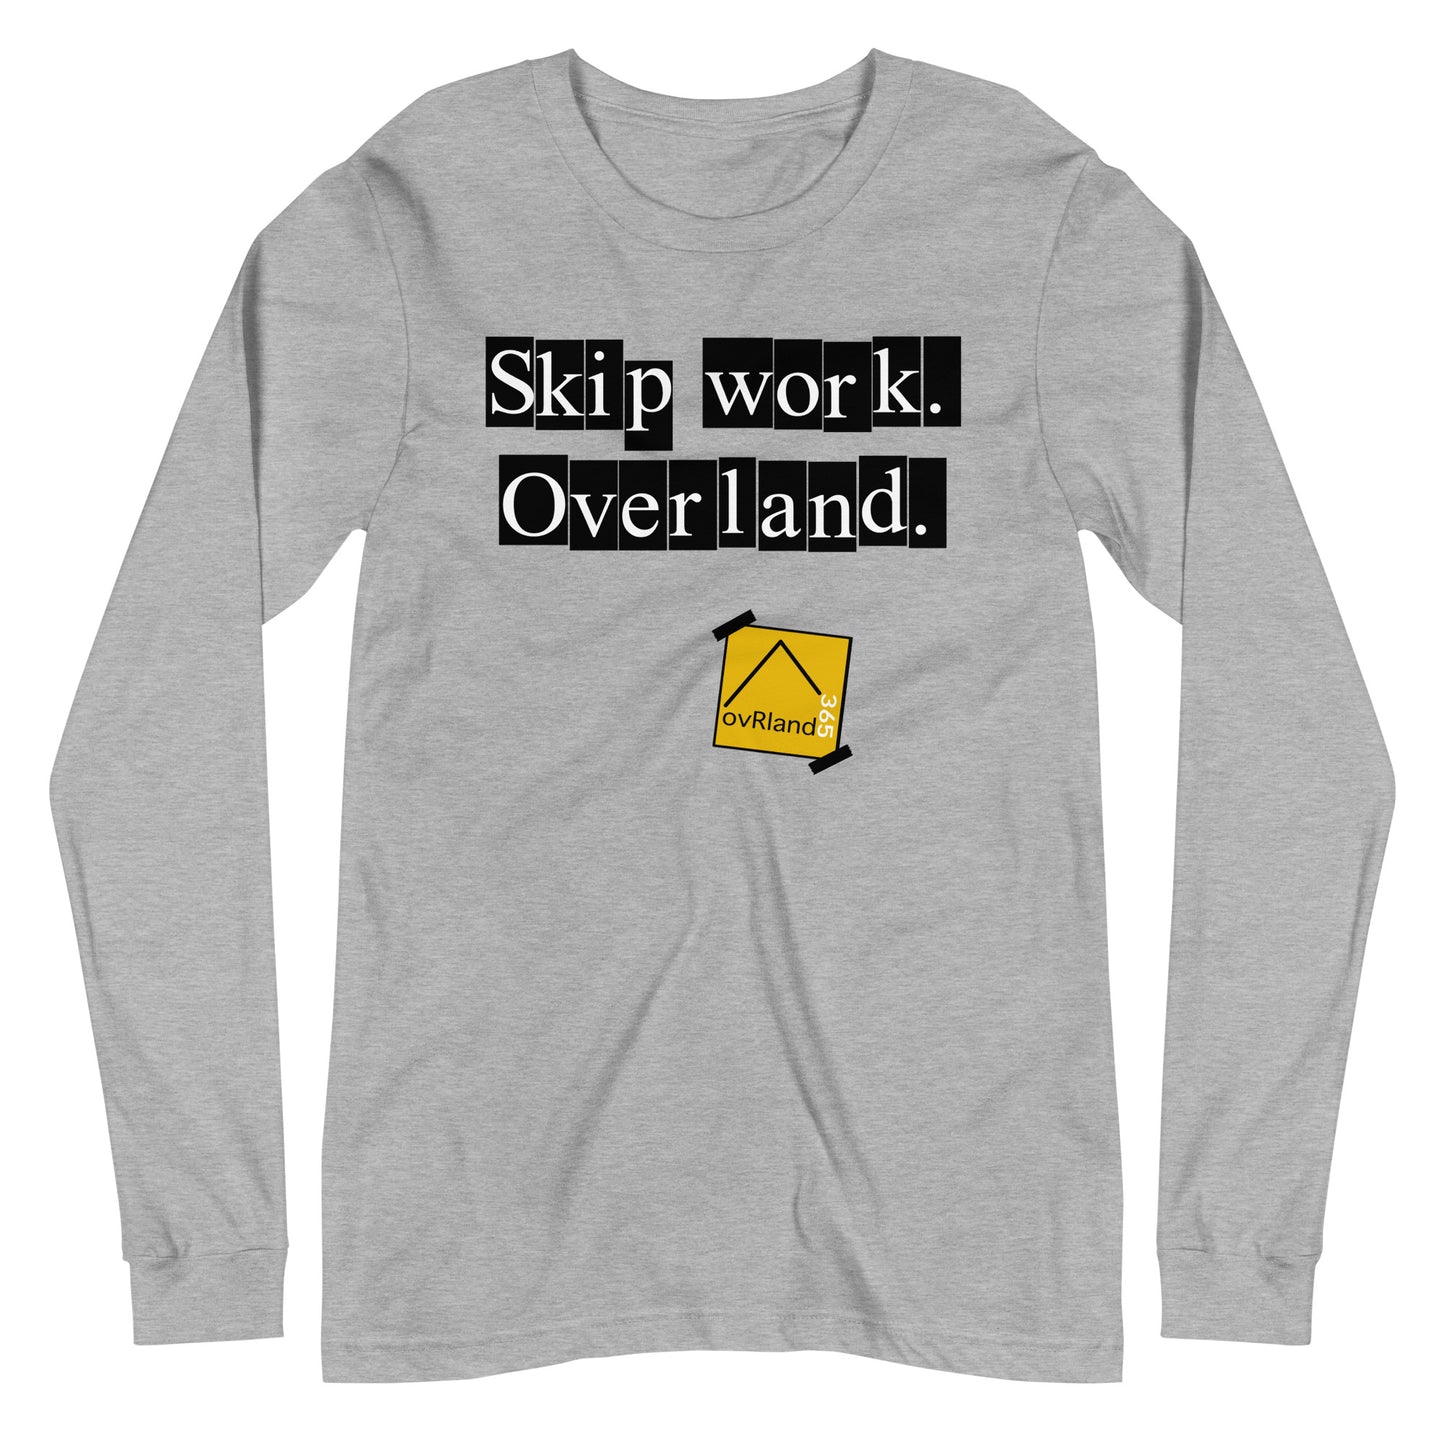 Skip work. Overland. Light Grey long-sleeve. overland365.com